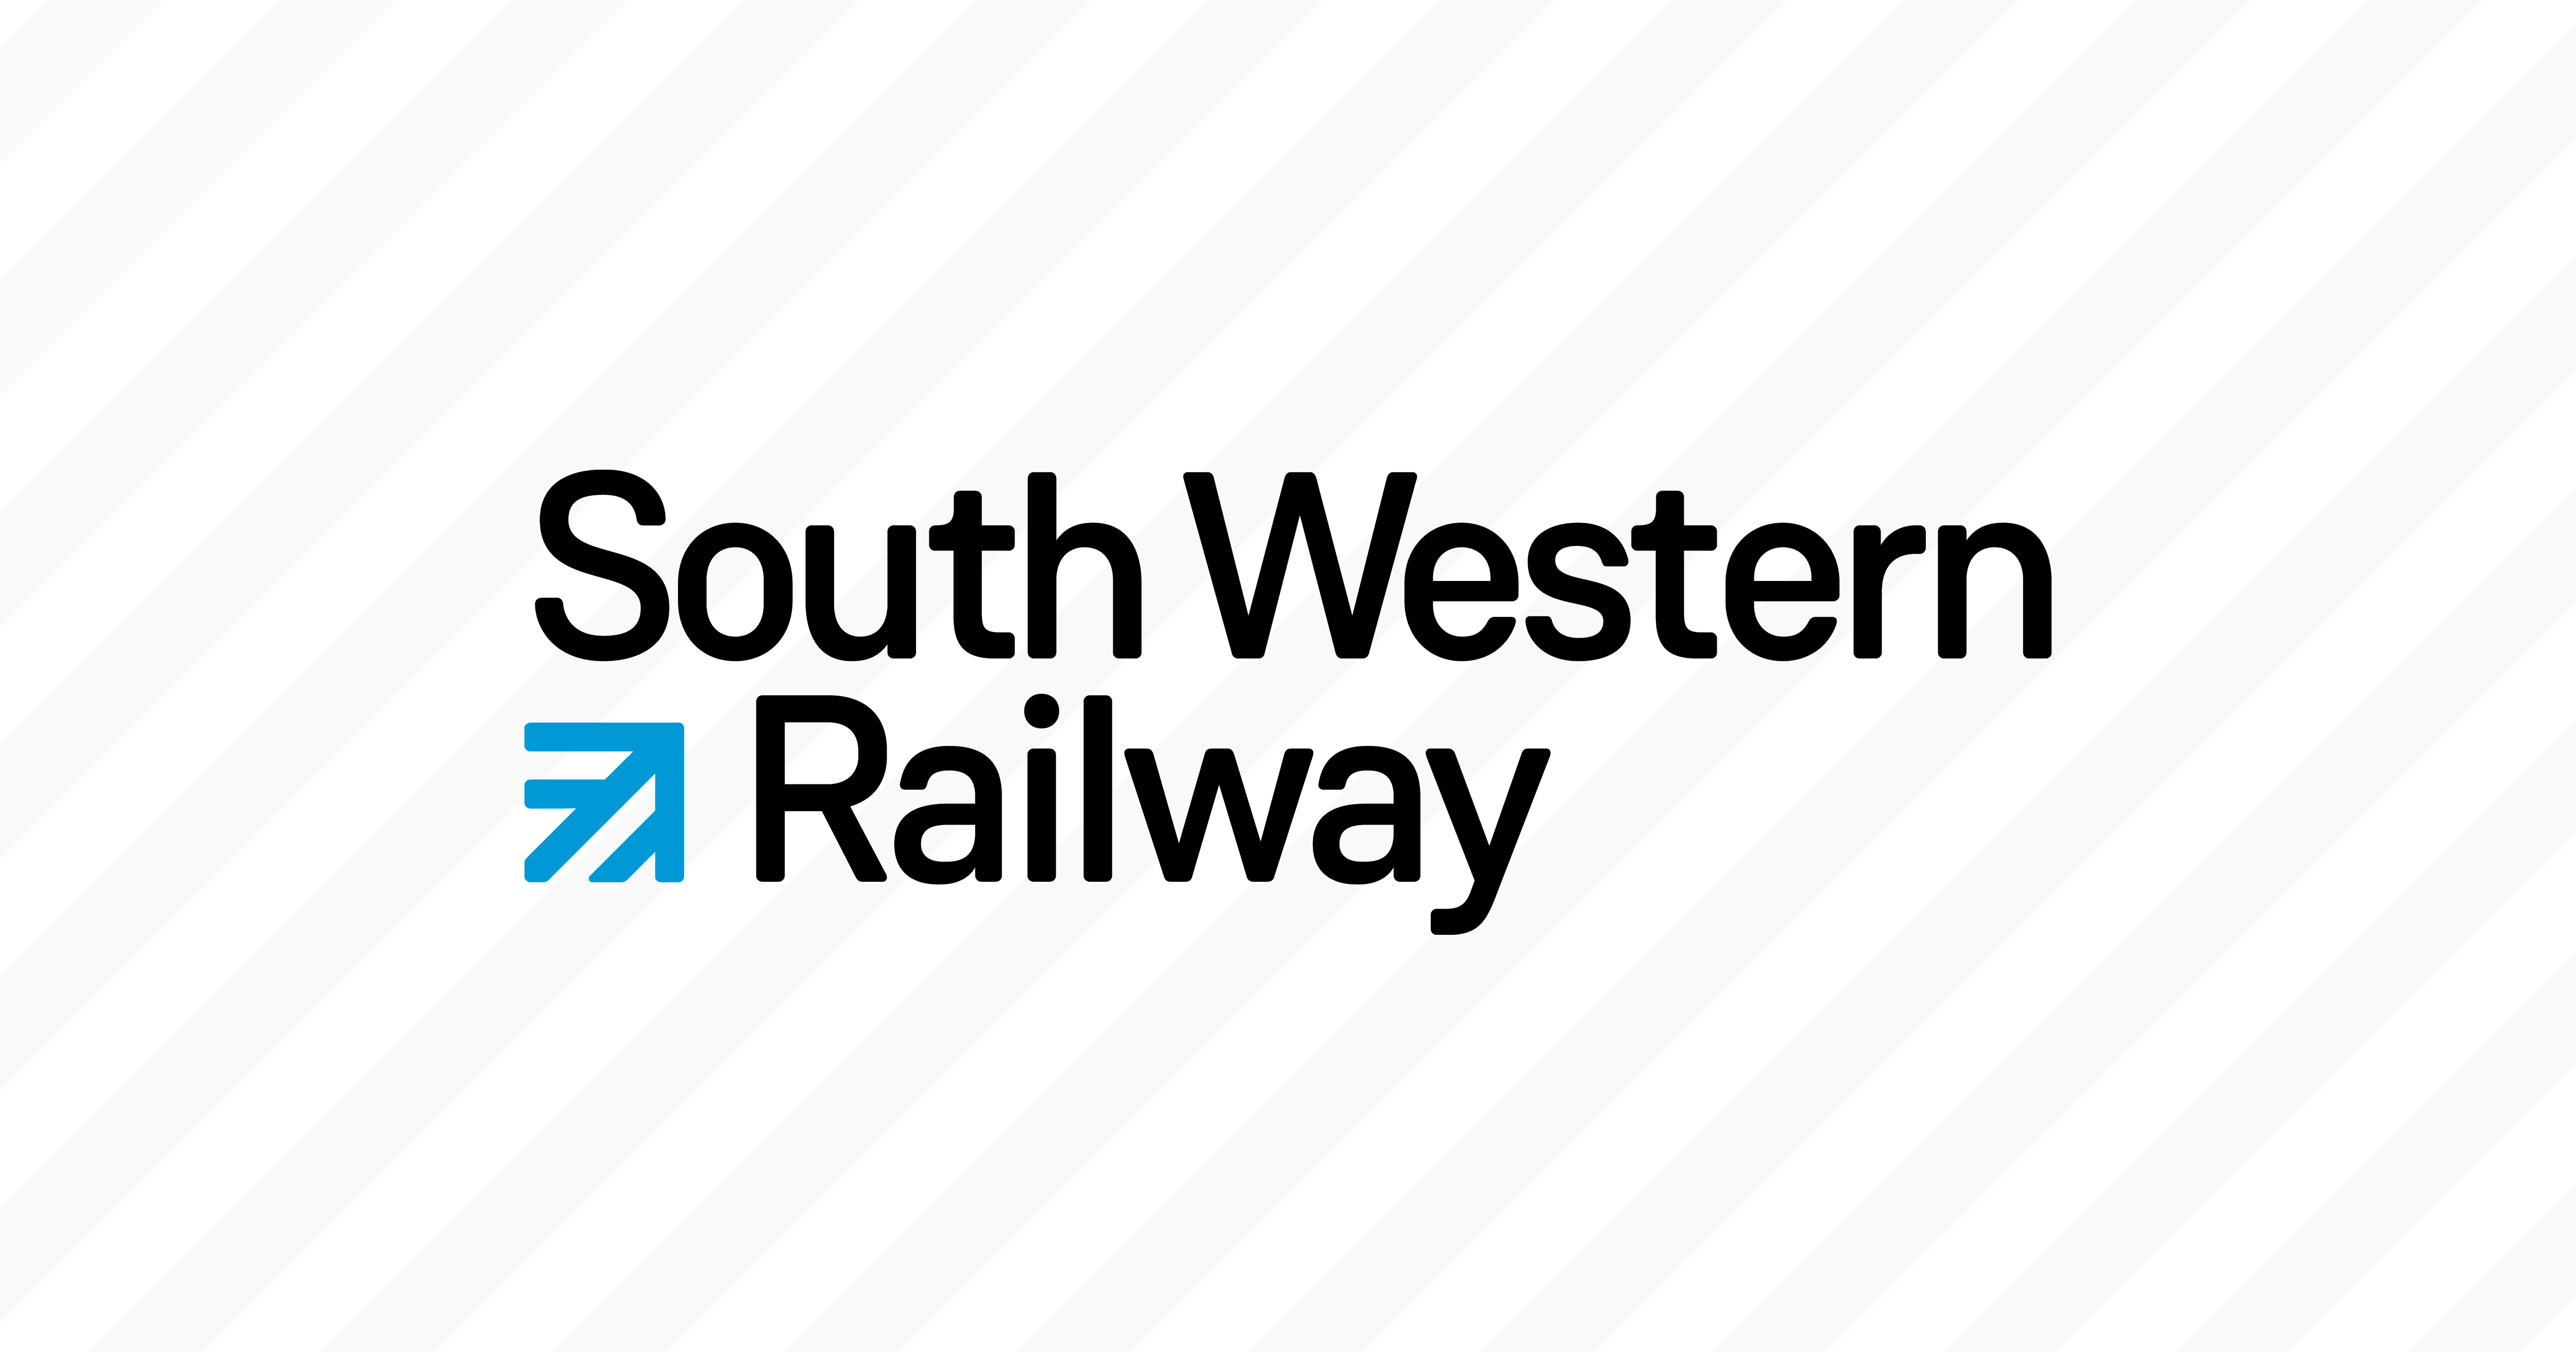 www.southwesternrailway.com